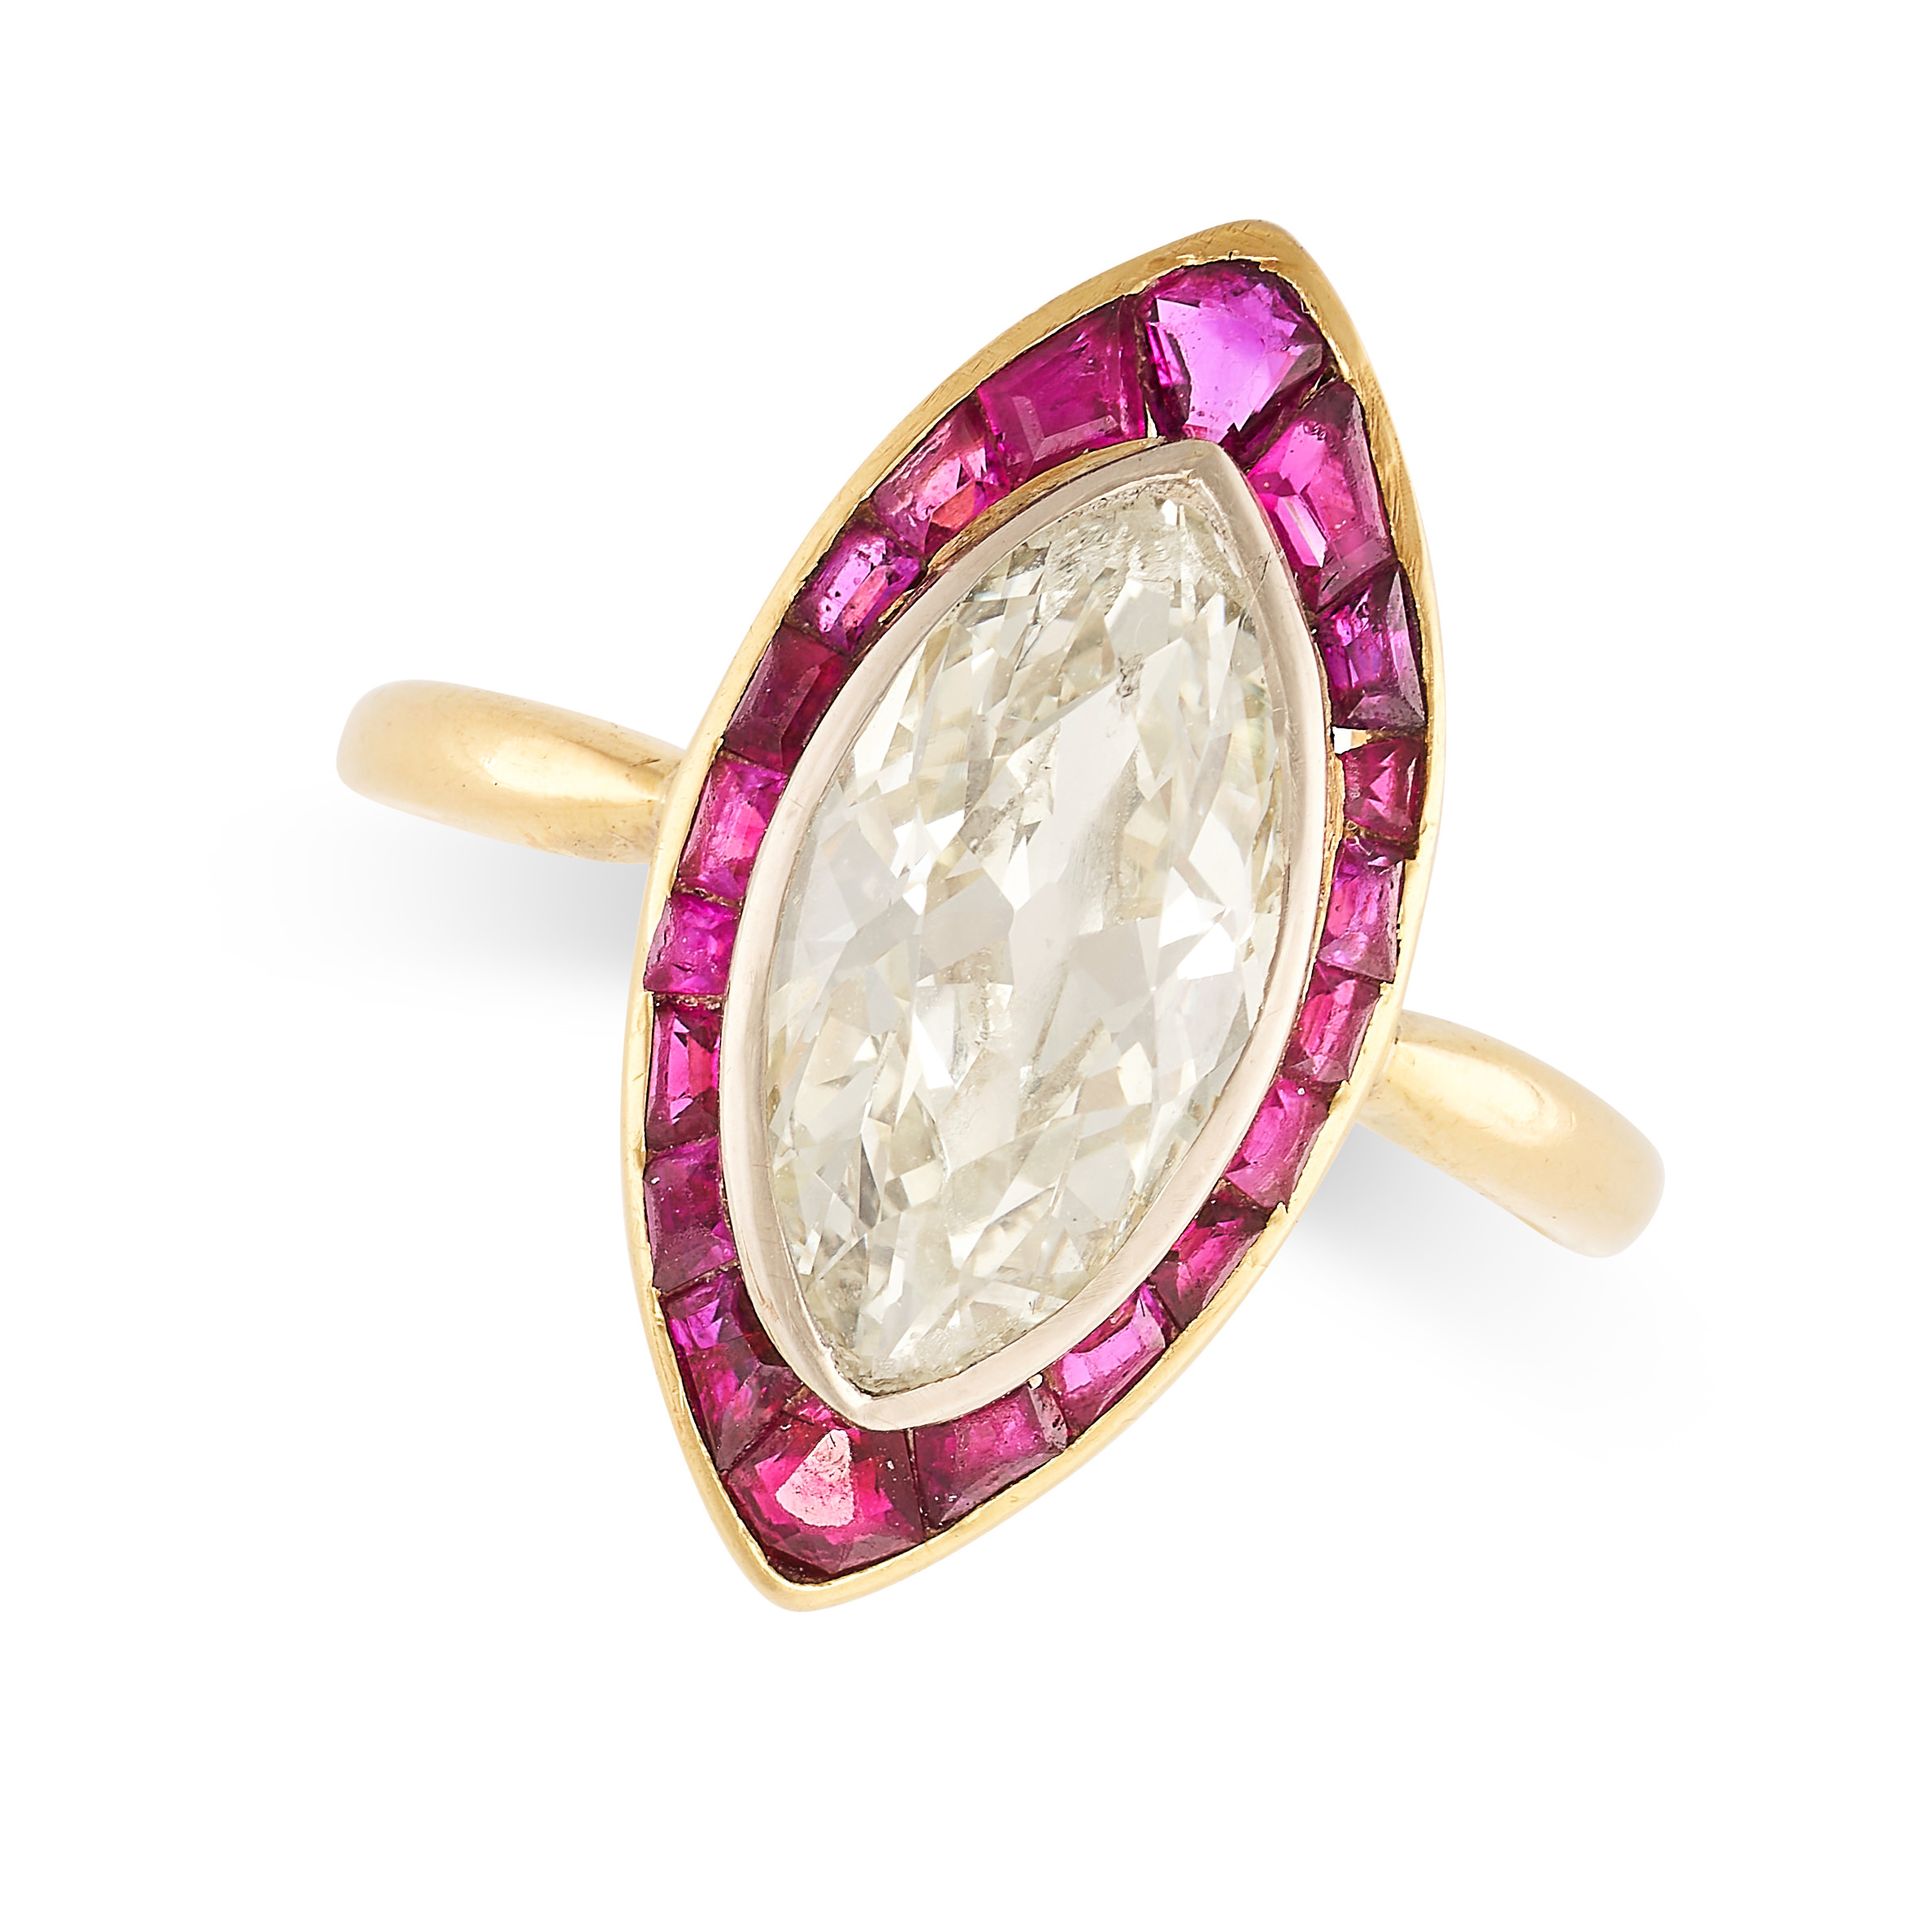 Null 18K黄金红宝石和钻石戒指，镶嵌一颗2.35克拉的榄尖形钻石，边框为阶梯形切割红宝石，法国进口标志，尺寸为P/8，重4.2克。